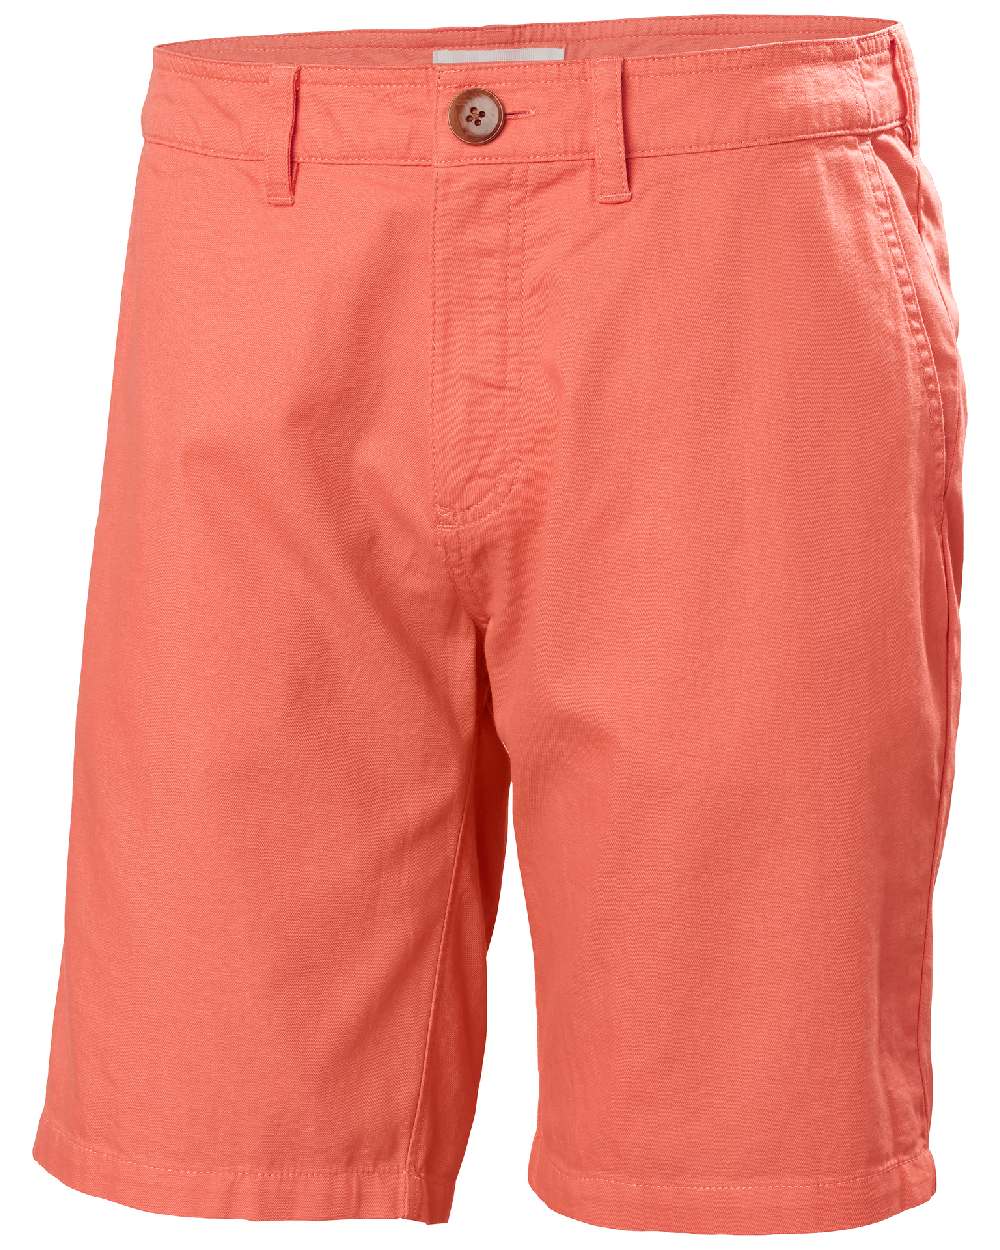 Peach Echo coloured Helly Hansen Mens Dock Shorts on white background 